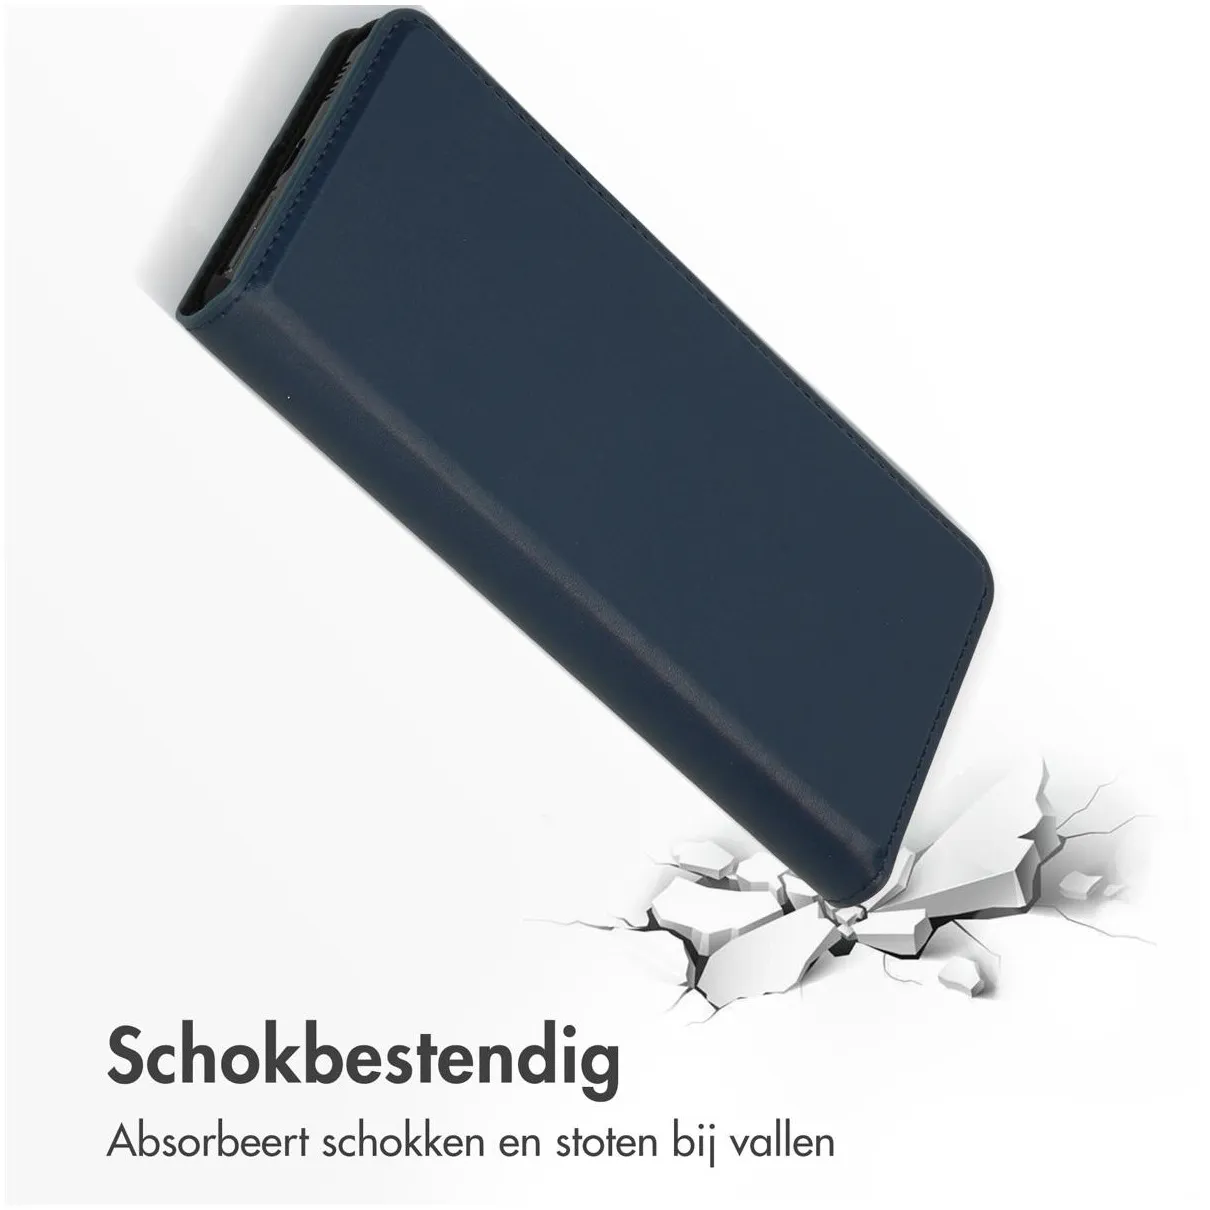 Accezz Premium Leather Slim Book Case voor Samsung Galaxy A53 Donkerblauw